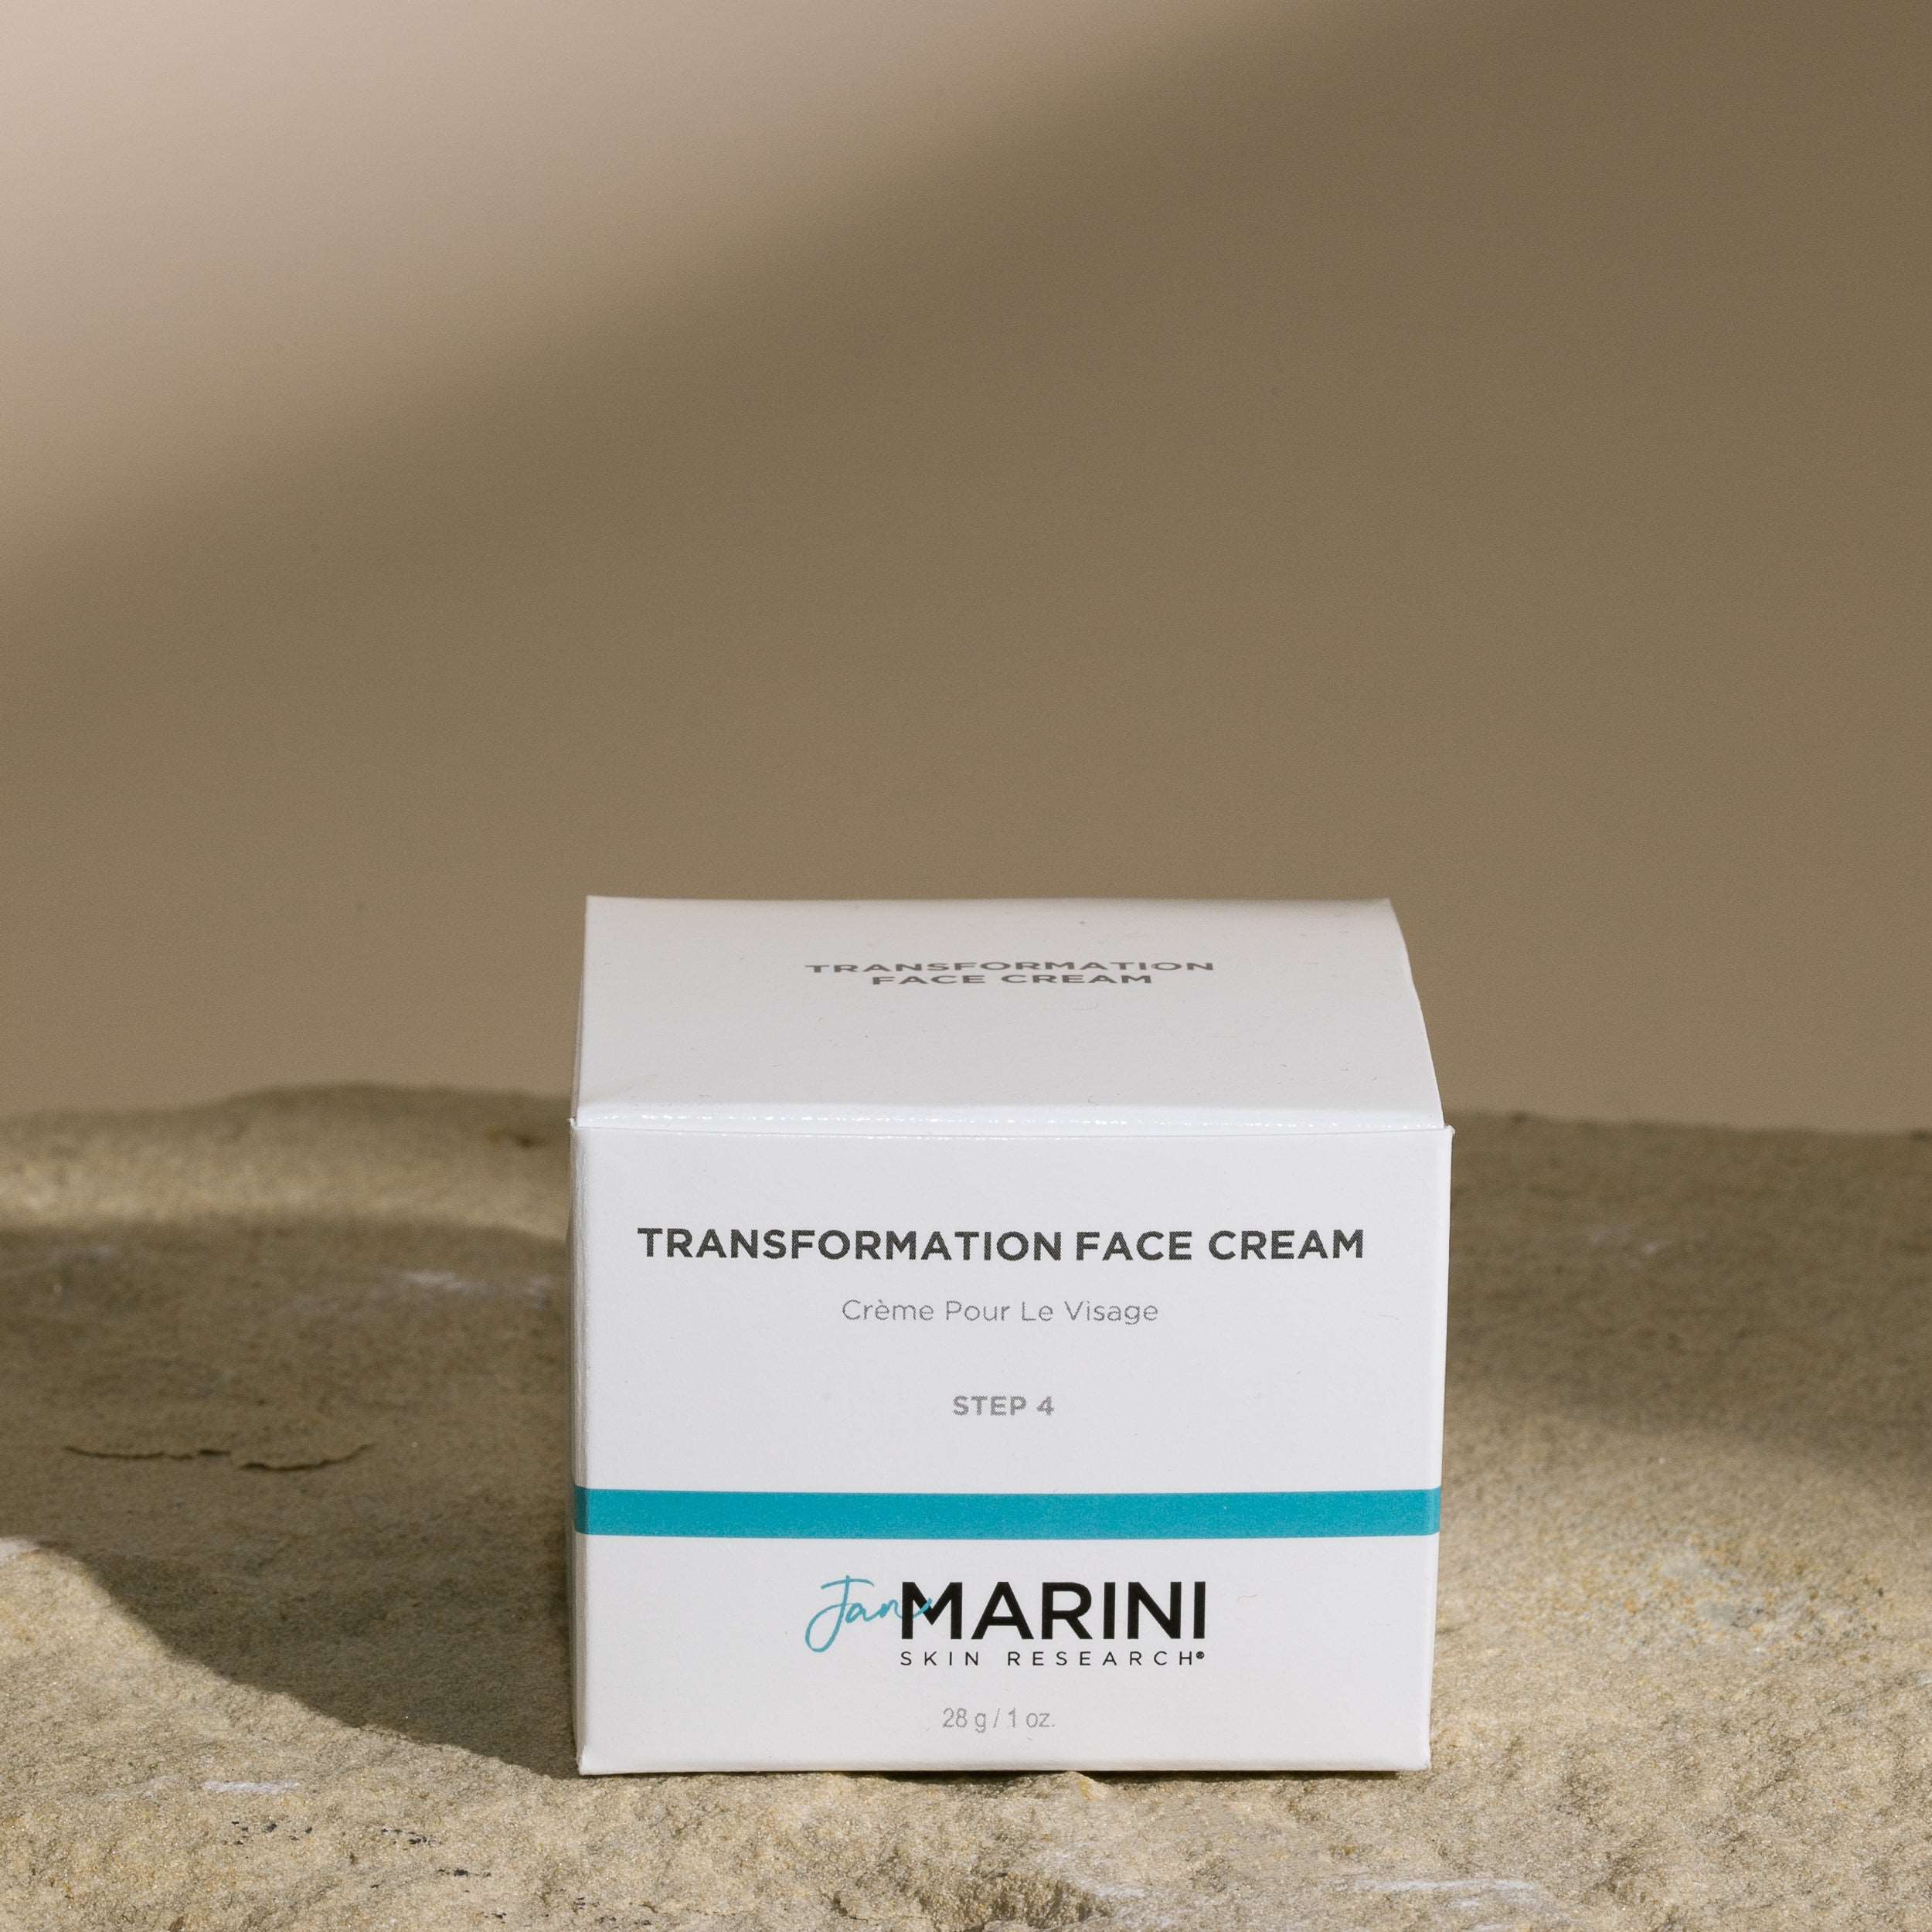 Transformation Face Cream Jan Marini